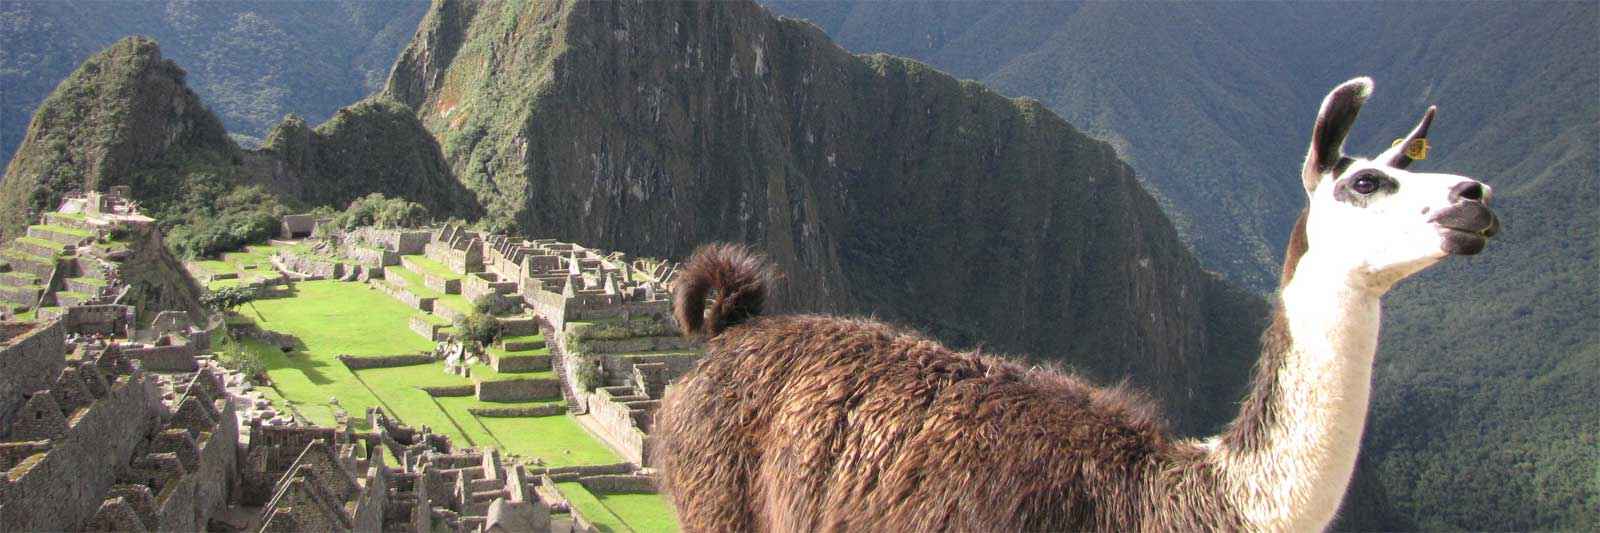 Llama in the foreground of Machu Picchu